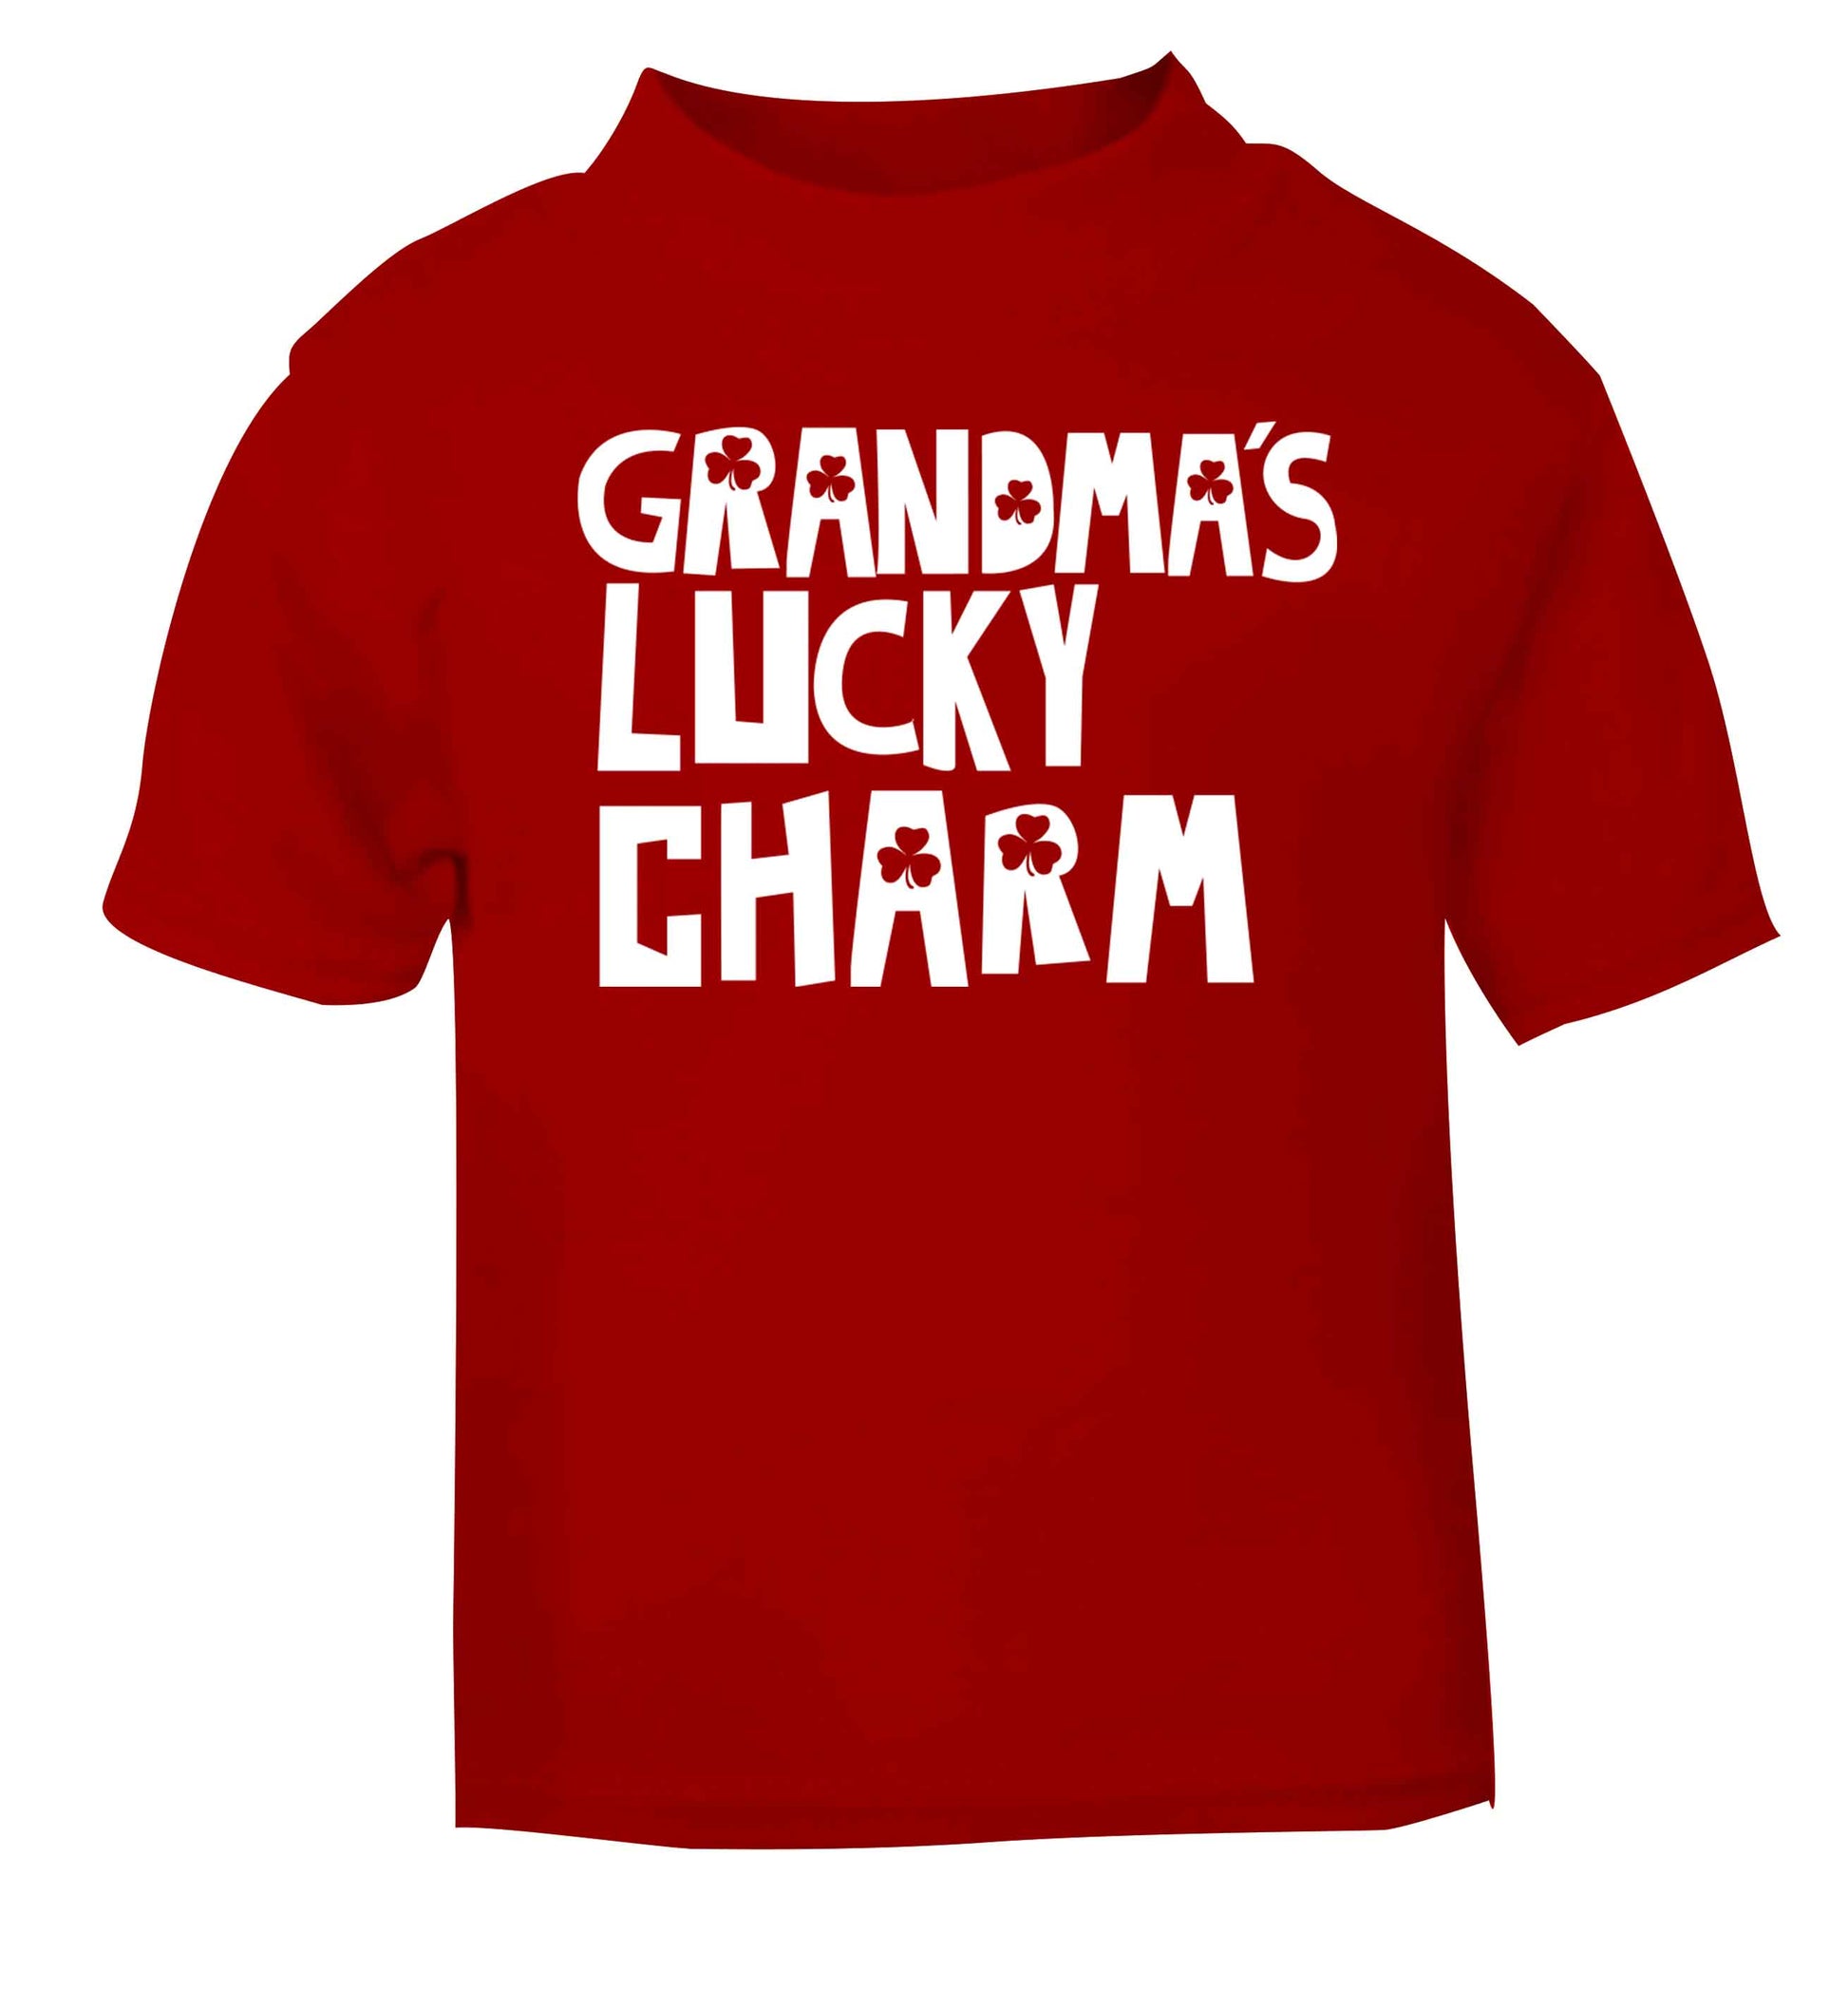 Grandma's lucky charm red baby toddler Tshirt 2 Years